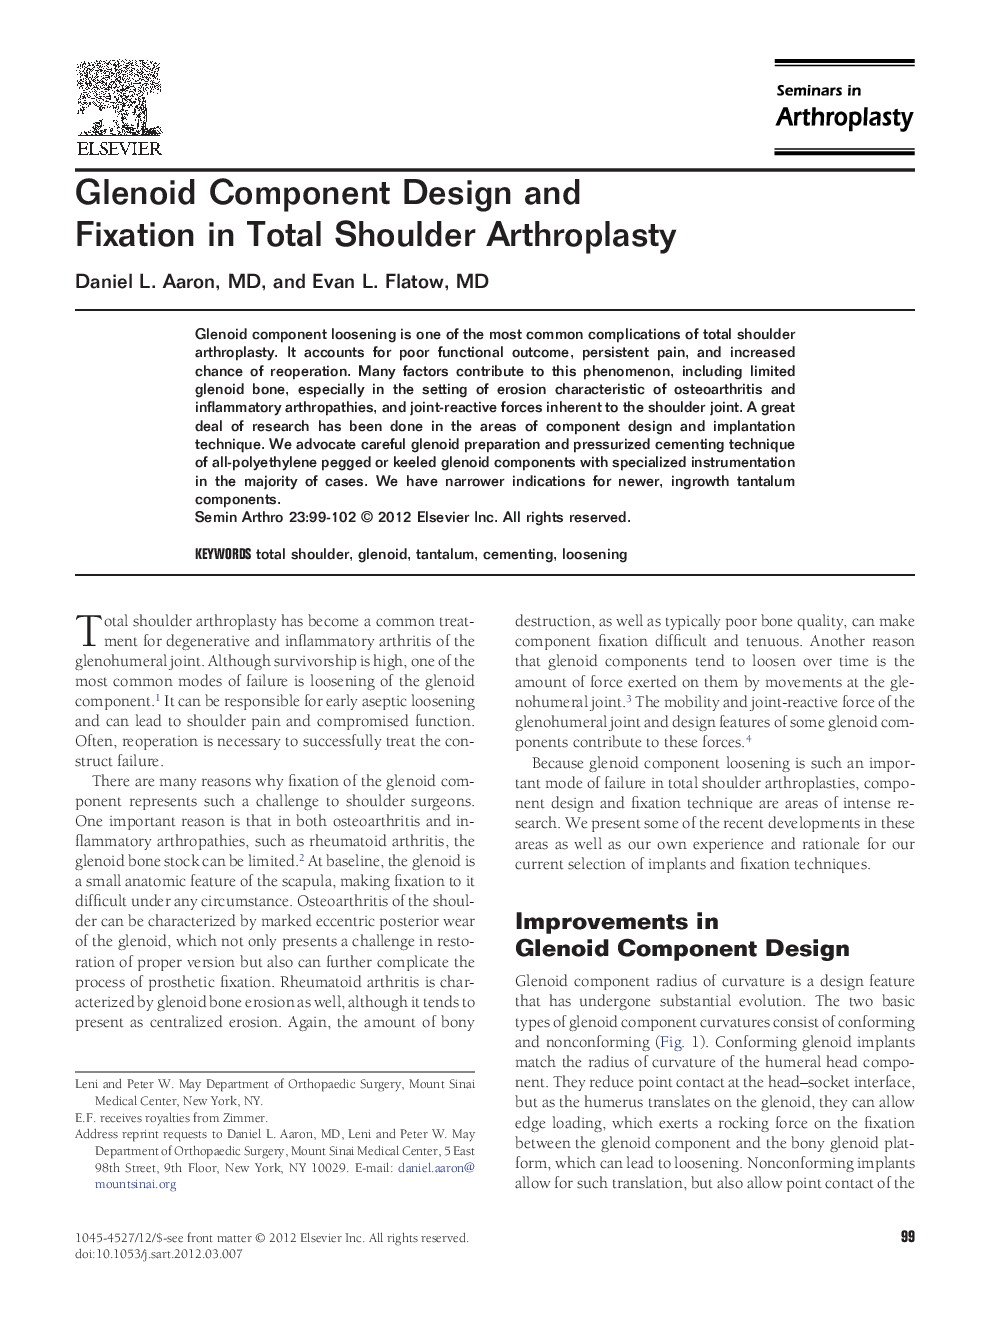 Glenoid Component Design and Fixation in Total Shoulder Arthroplasty 